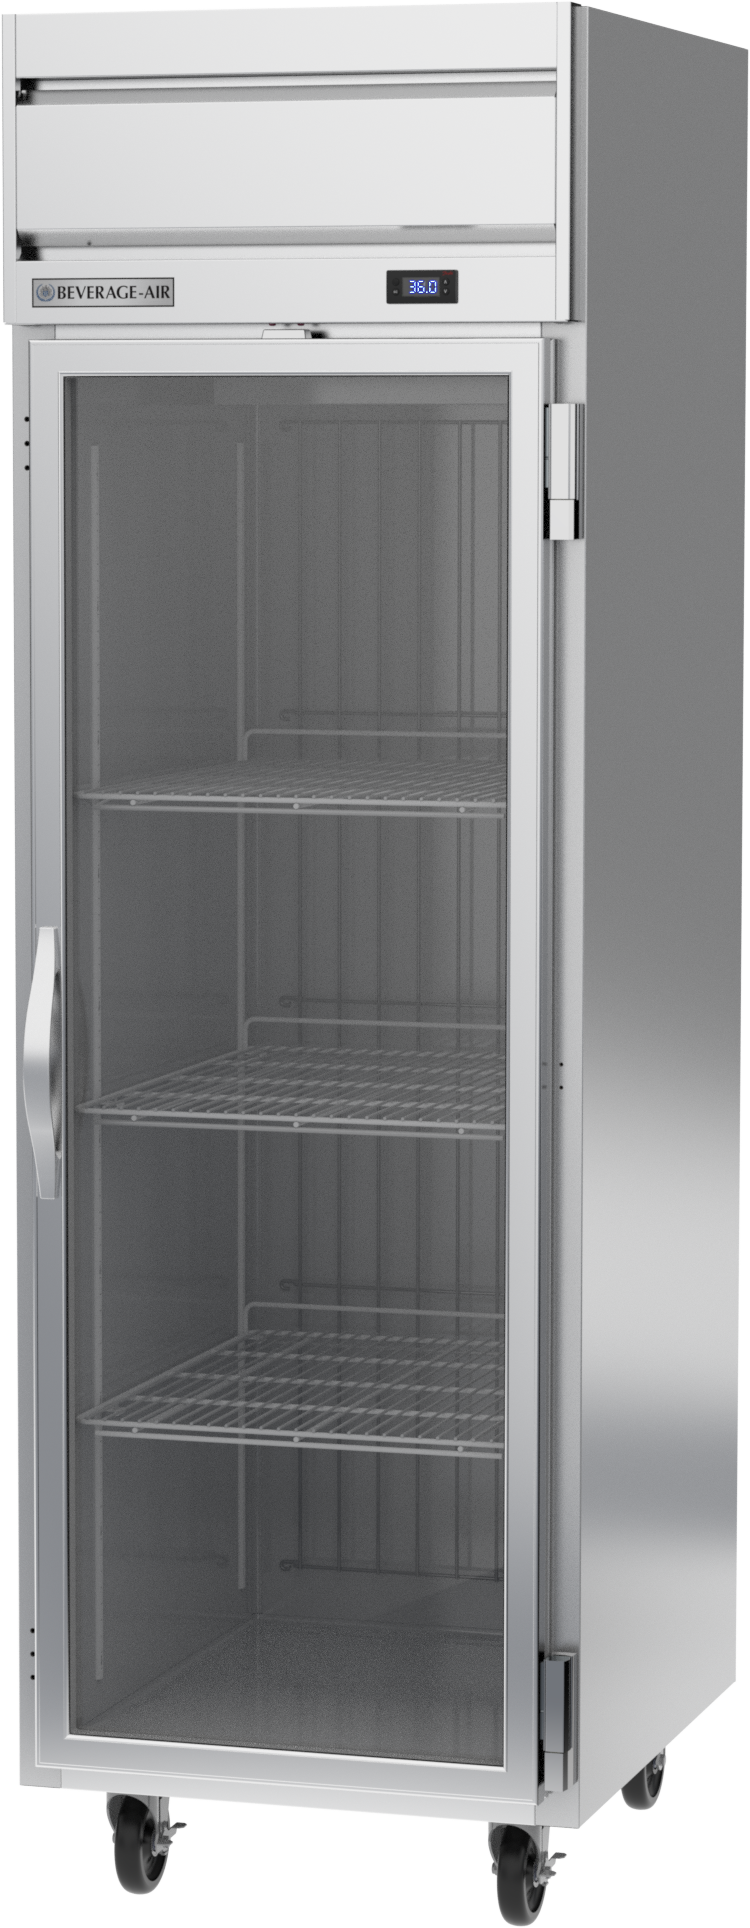 Beverage Air HR1HC-1G 1 Glass Door Top Mount Refrigerator Stainless Steel Front